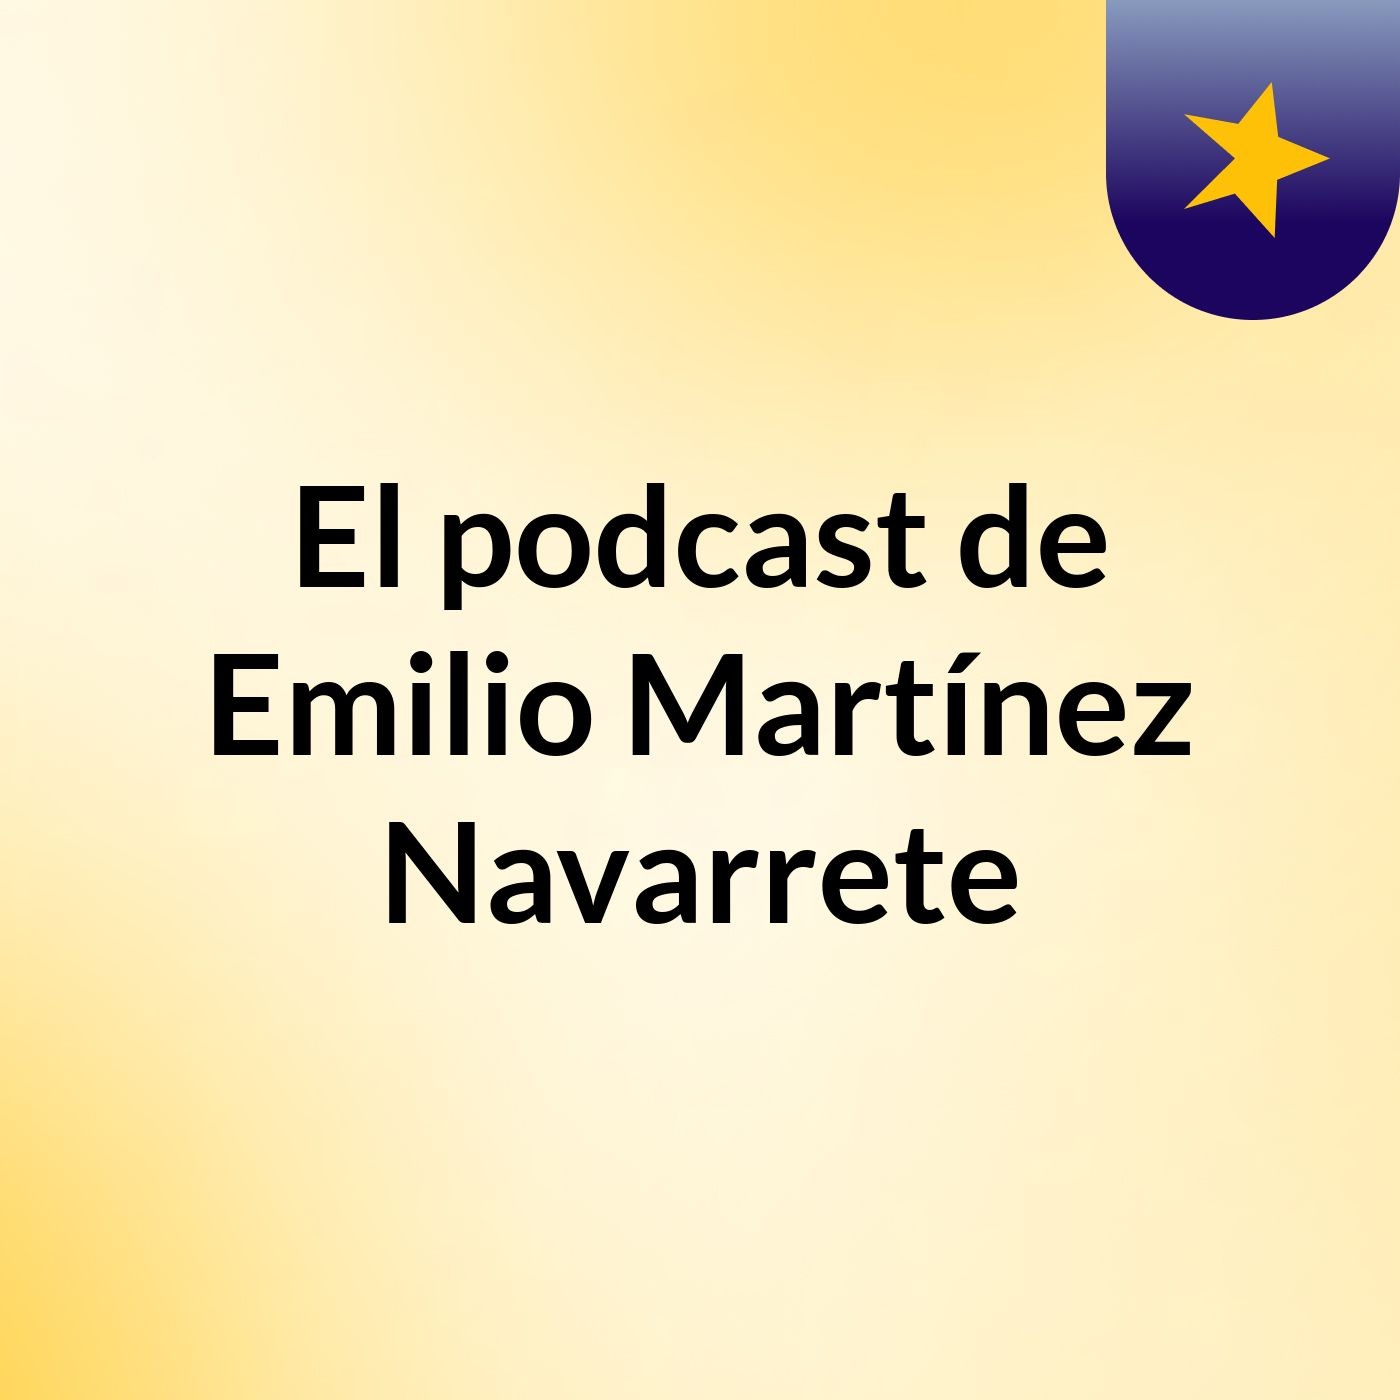 El podcast de Emilio Martínez Navarrete